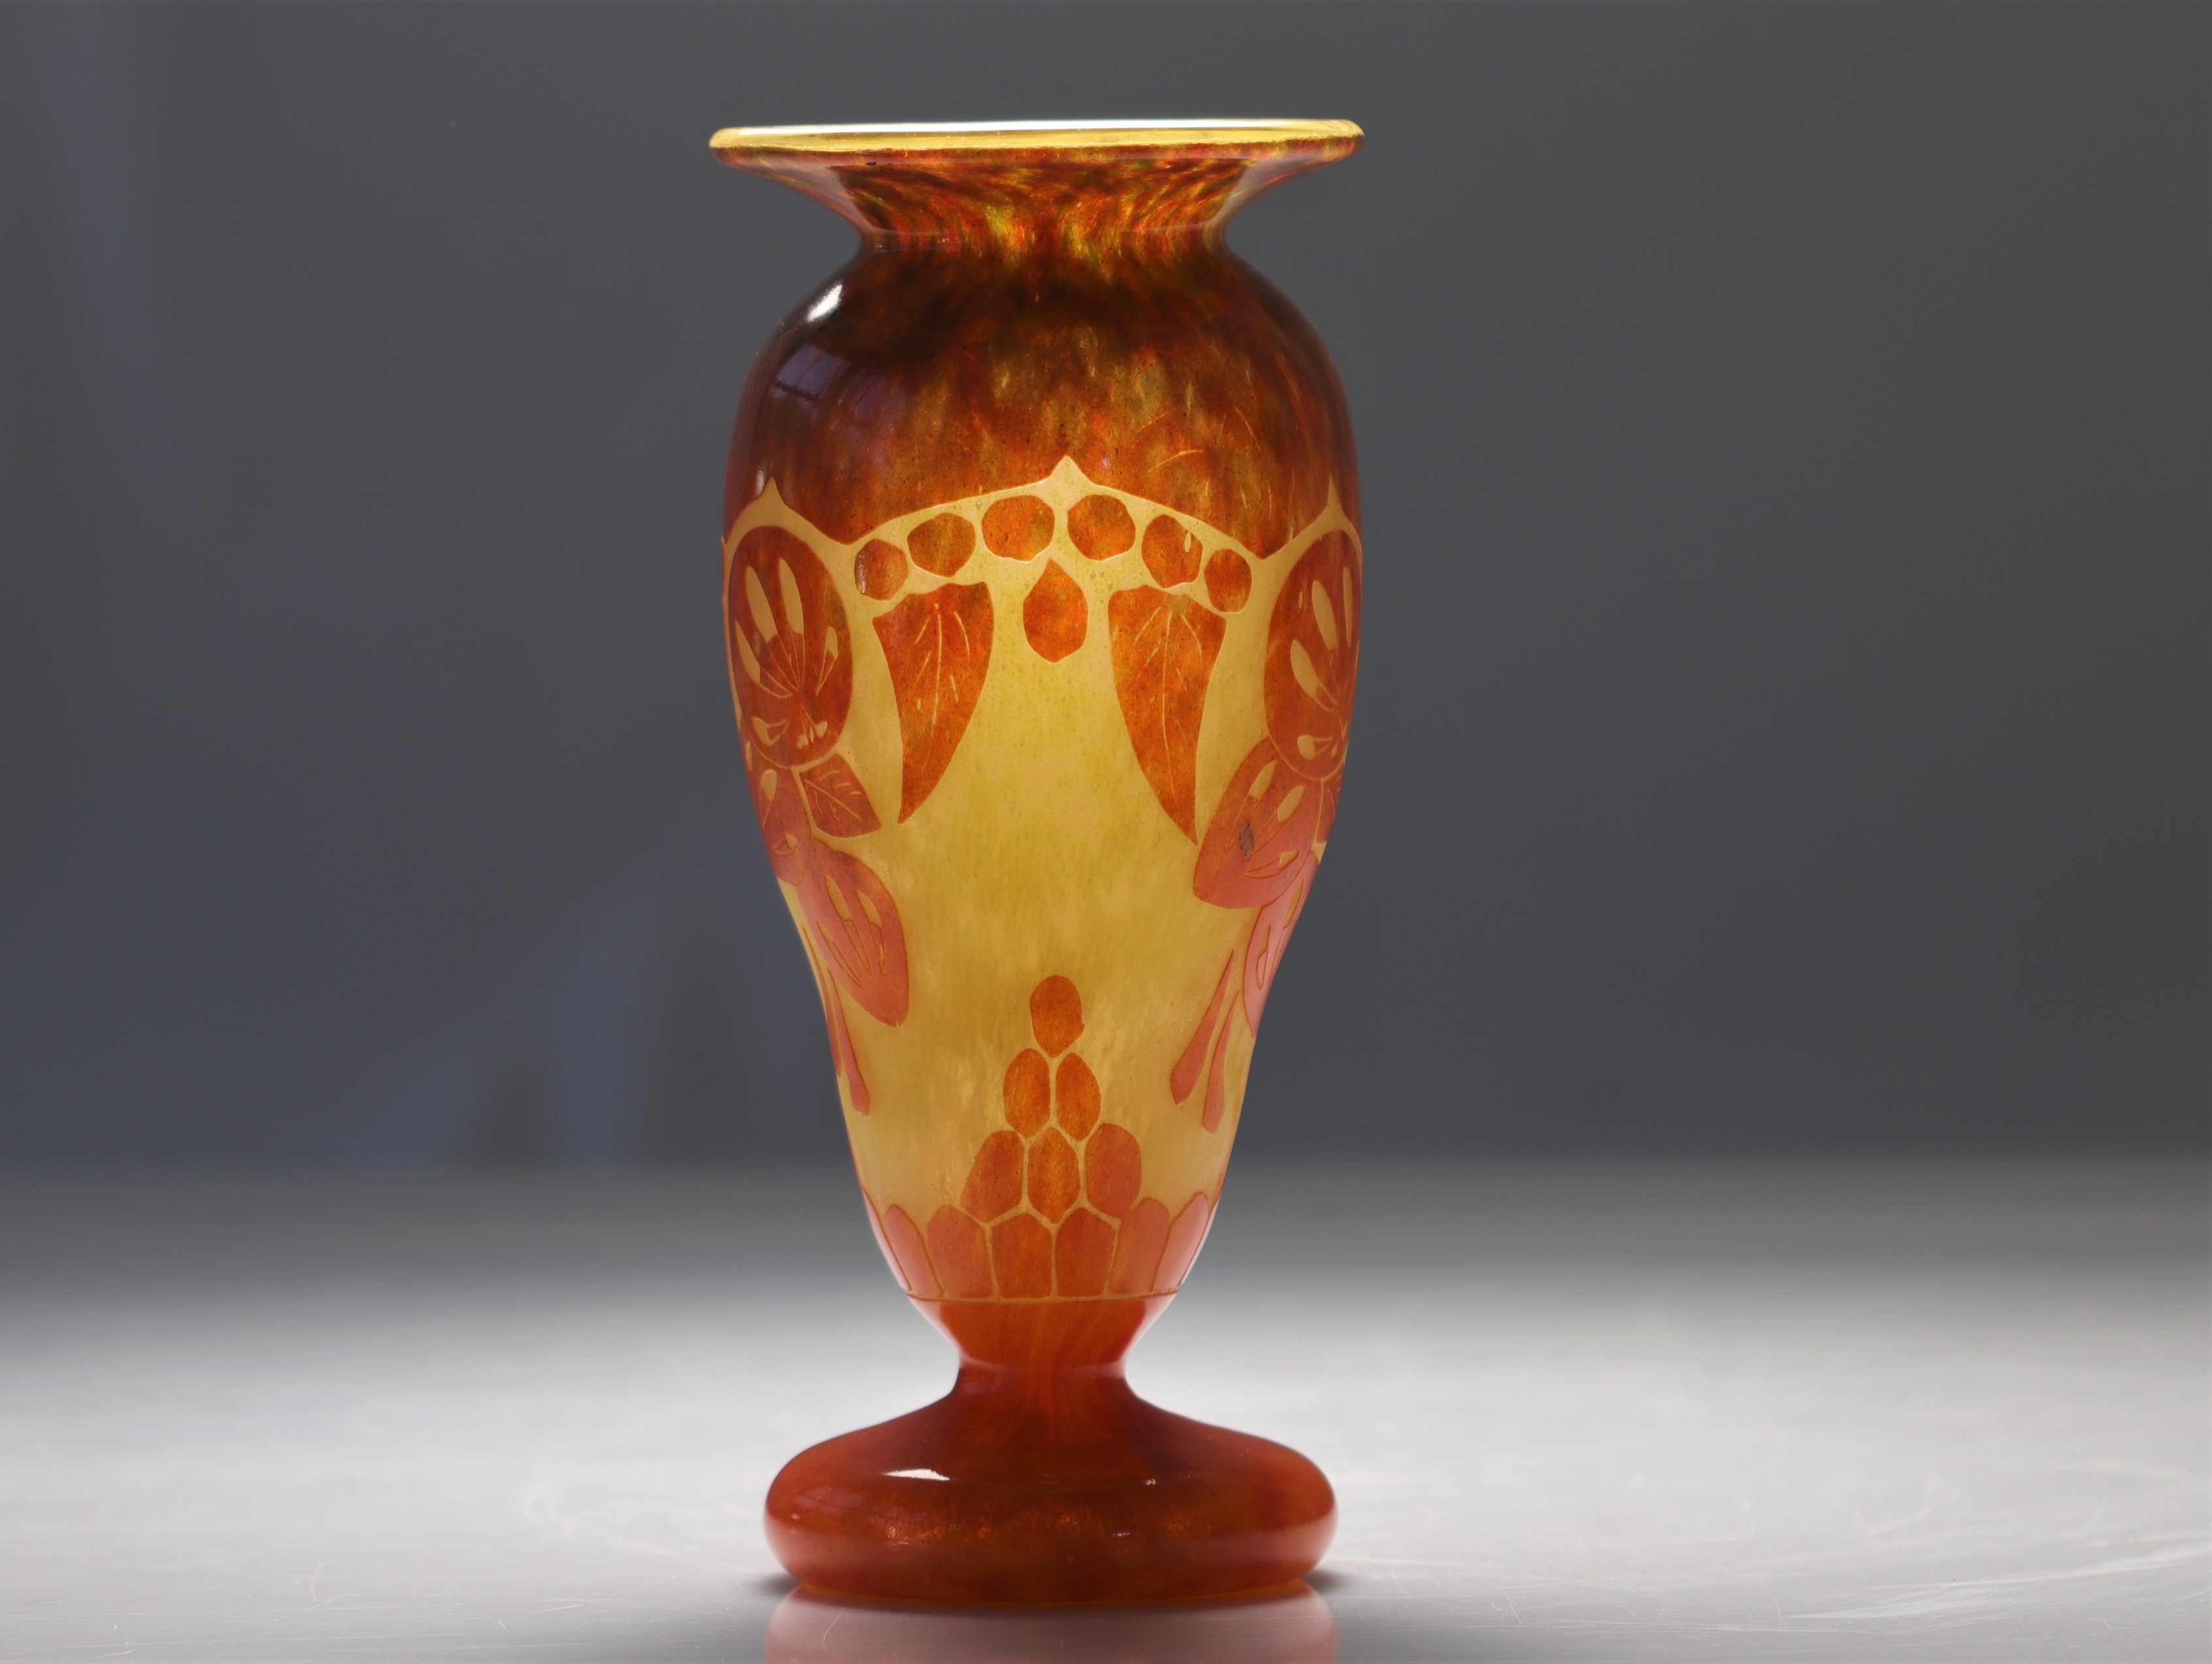 Le Verre Francais acid-etched vase with daffodil design - Image 2 of 2